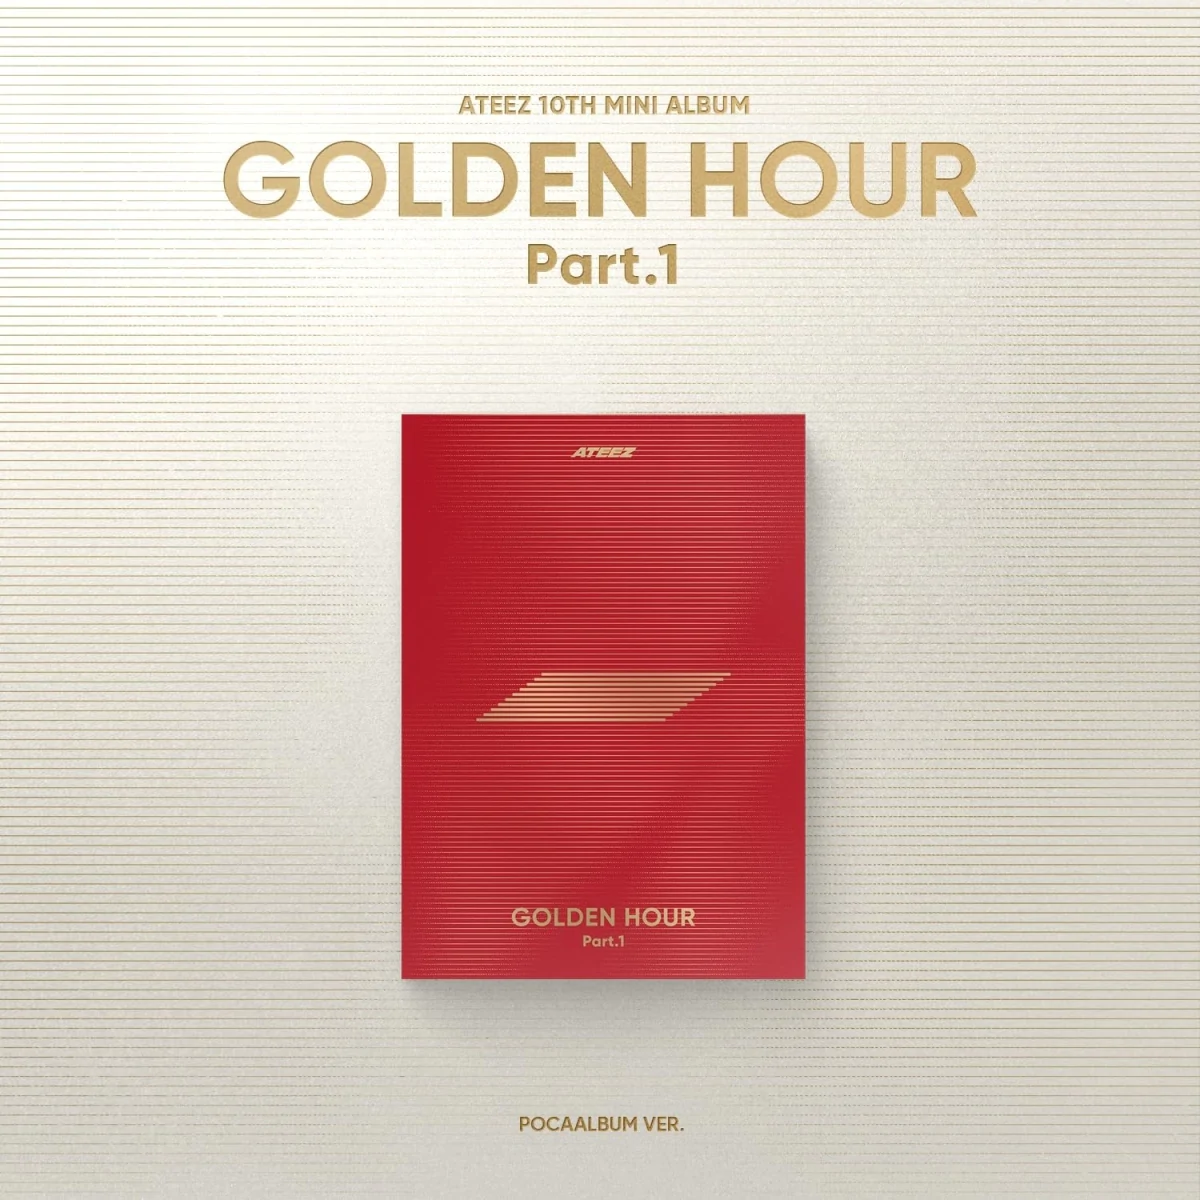 ATEEZ - GOLDEN HOUR : Part.1 (POCAALBUM VERSION) (10th Mini Album) 